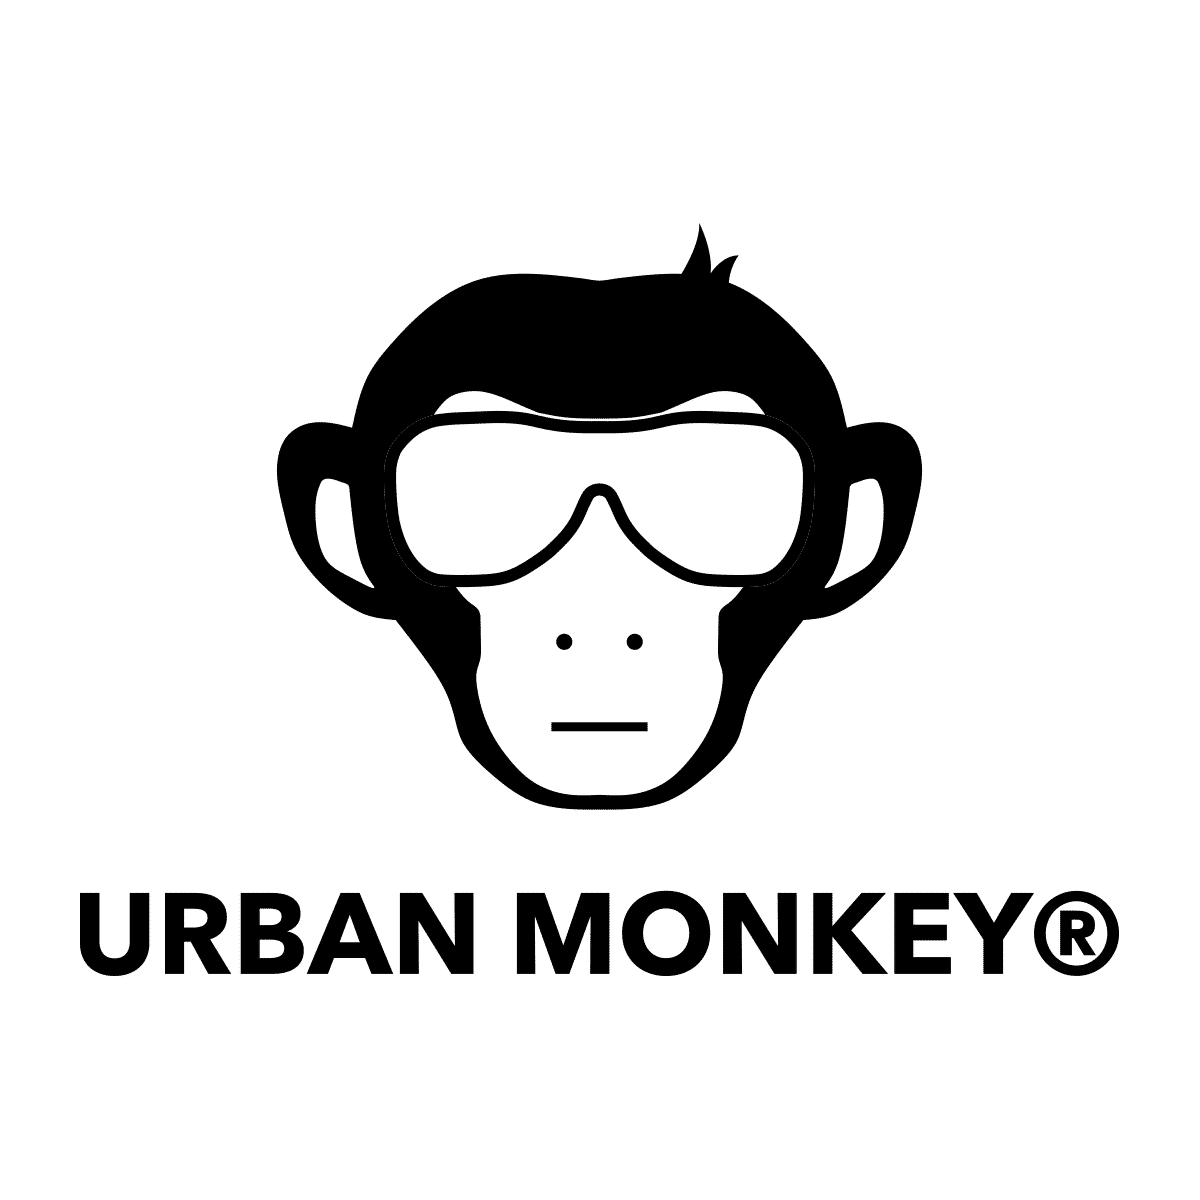 About Us  Urban Monkey – Urban Monkey®